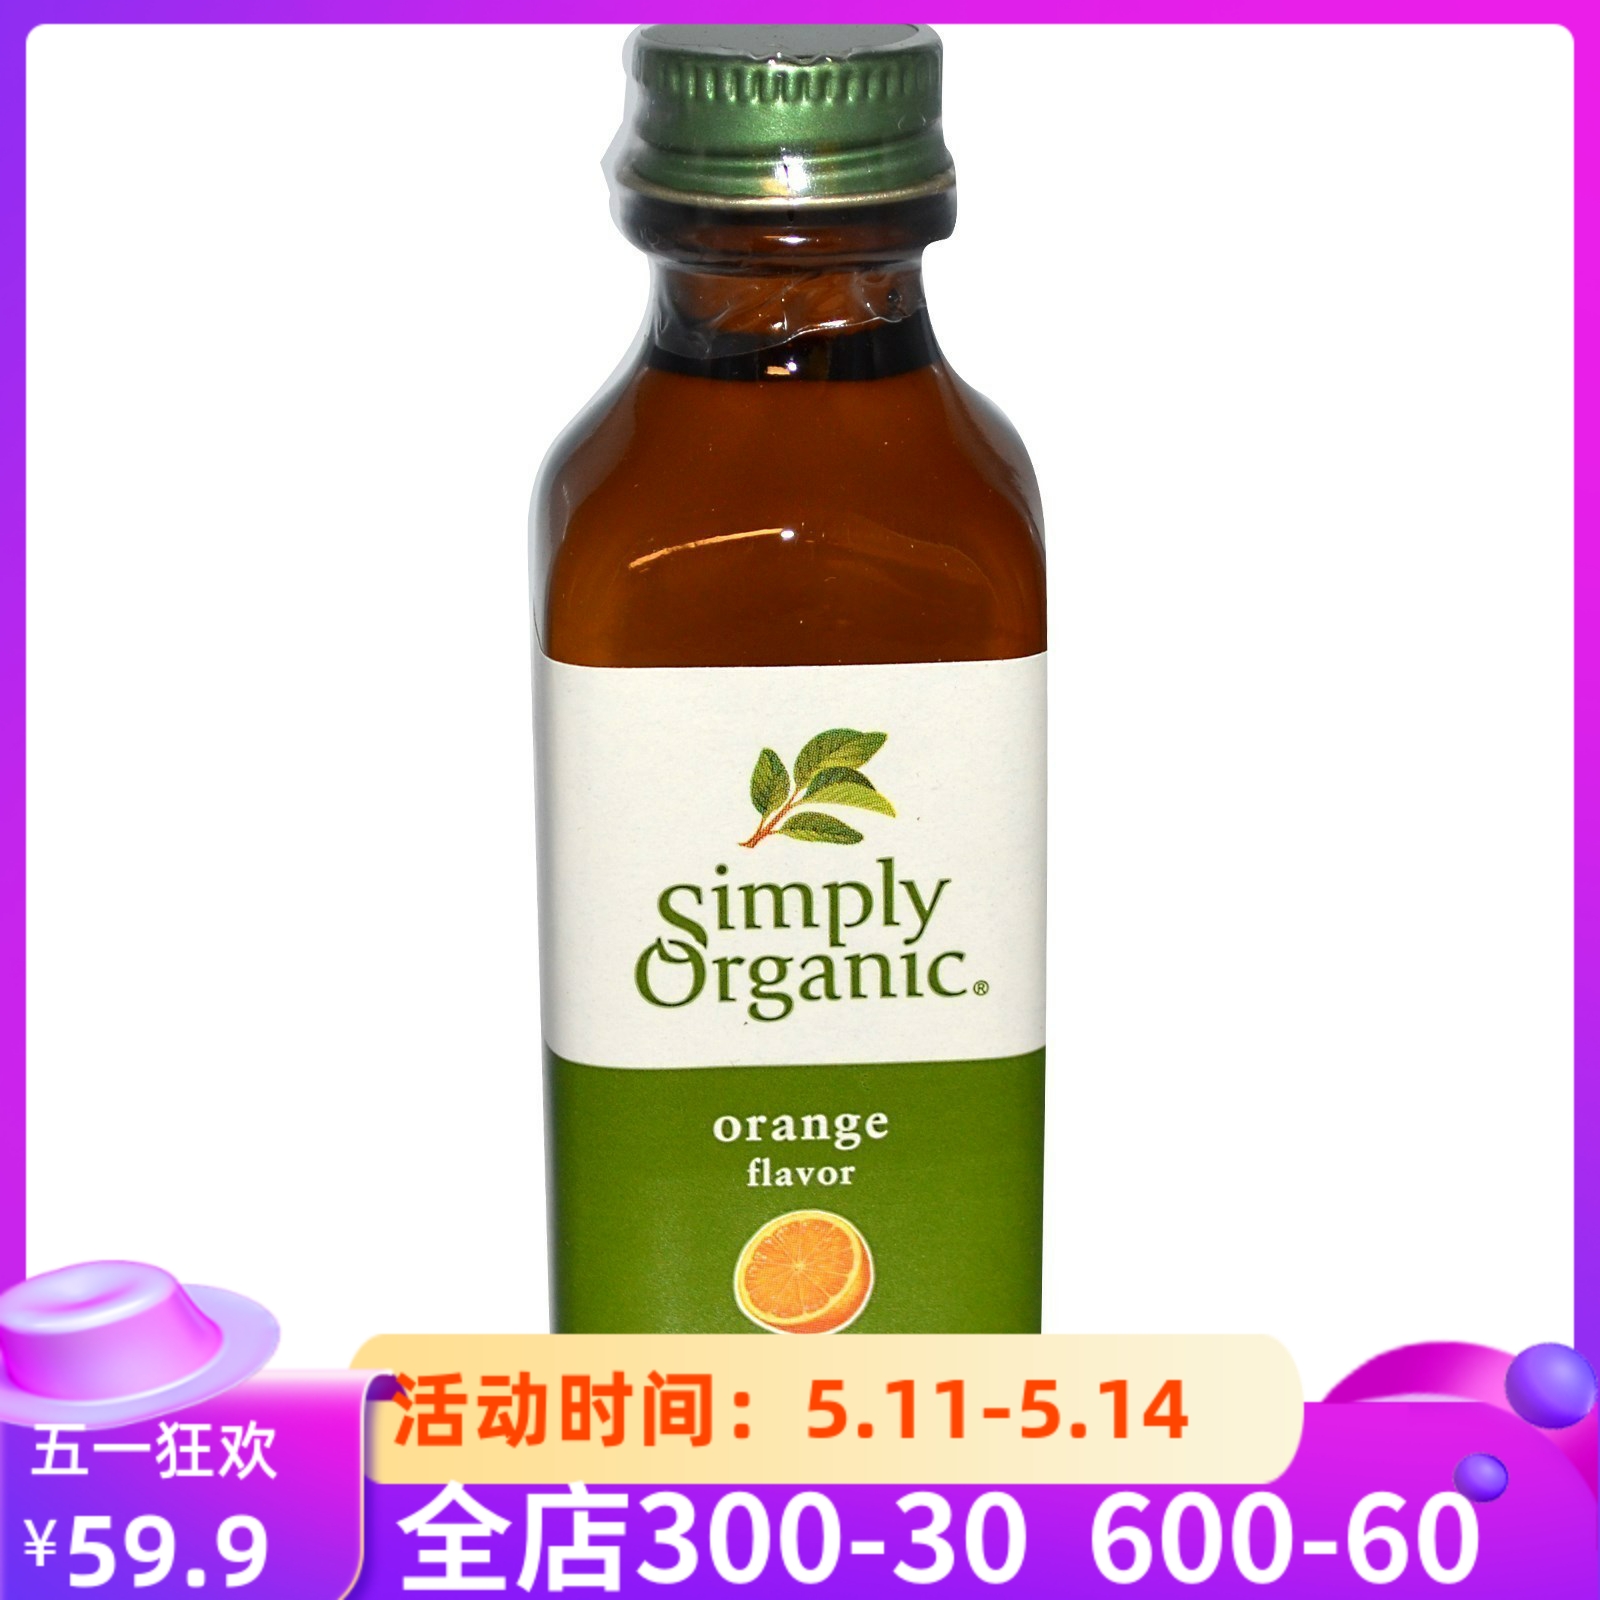 Simply Organic进口桔香葵花籽食用油香橙柠檬精油 Orange Flavor